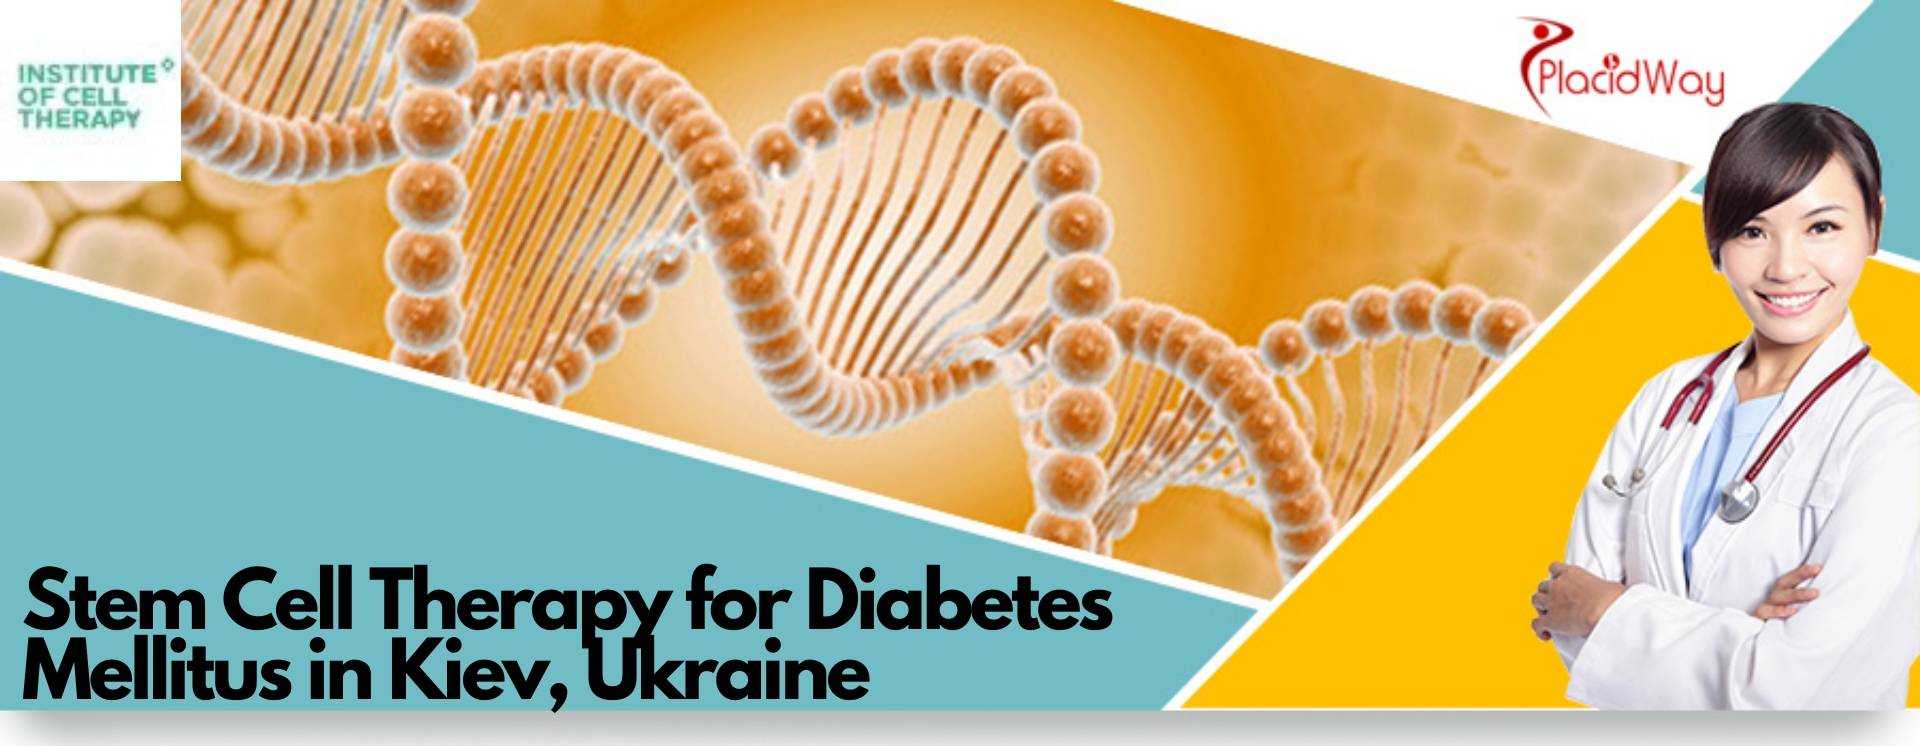 Stem Cell Therapy for Diabetes Mellitus in Kiev, Ukraine